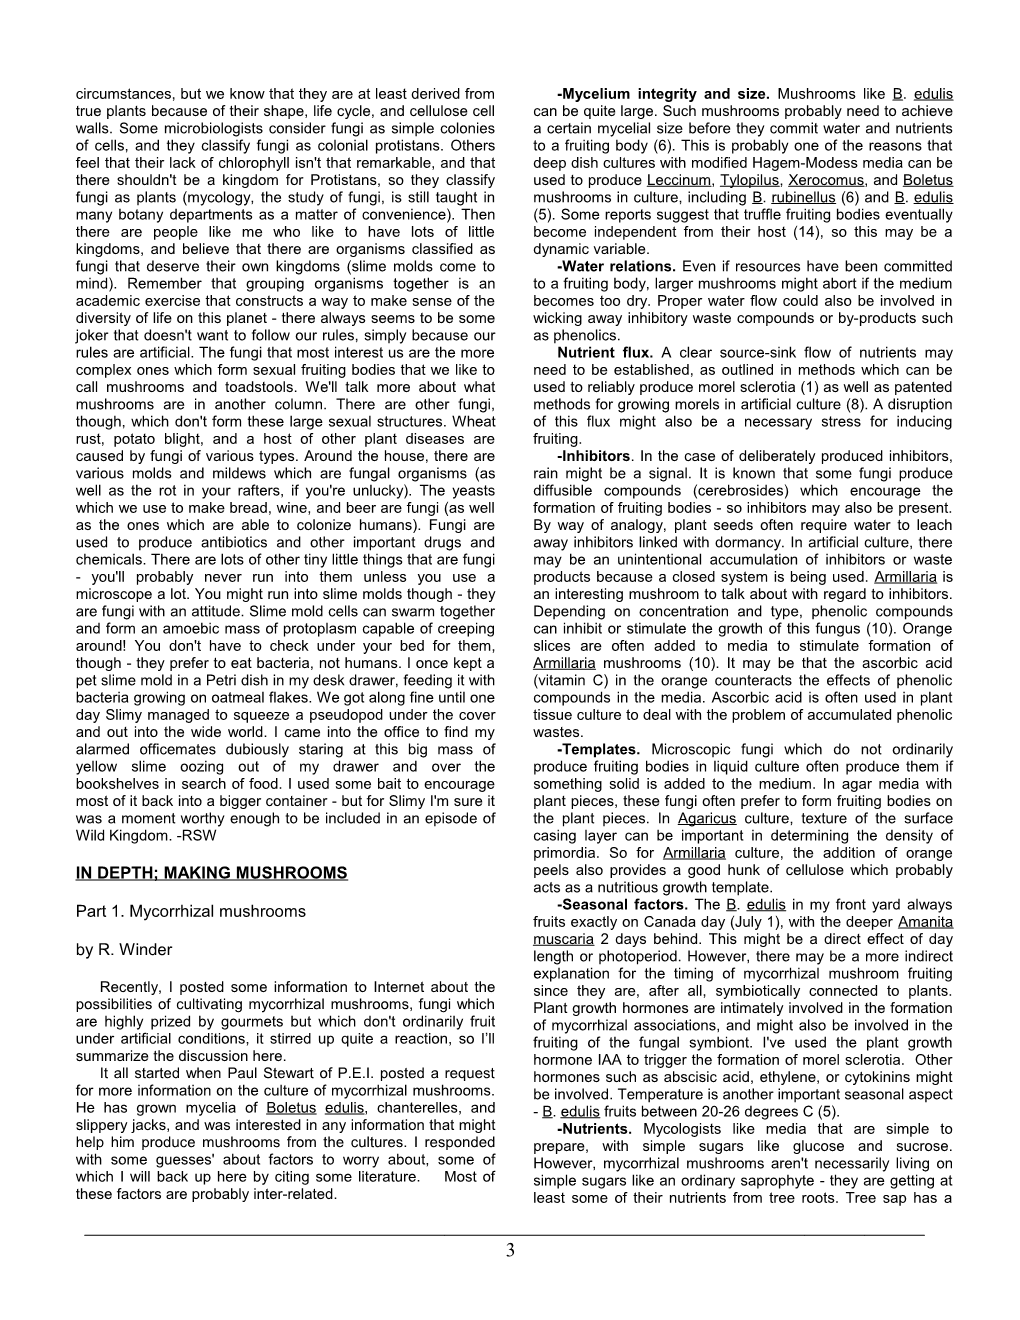 April, 1995South Vancouver Island Mycological Societyvol. 2.4